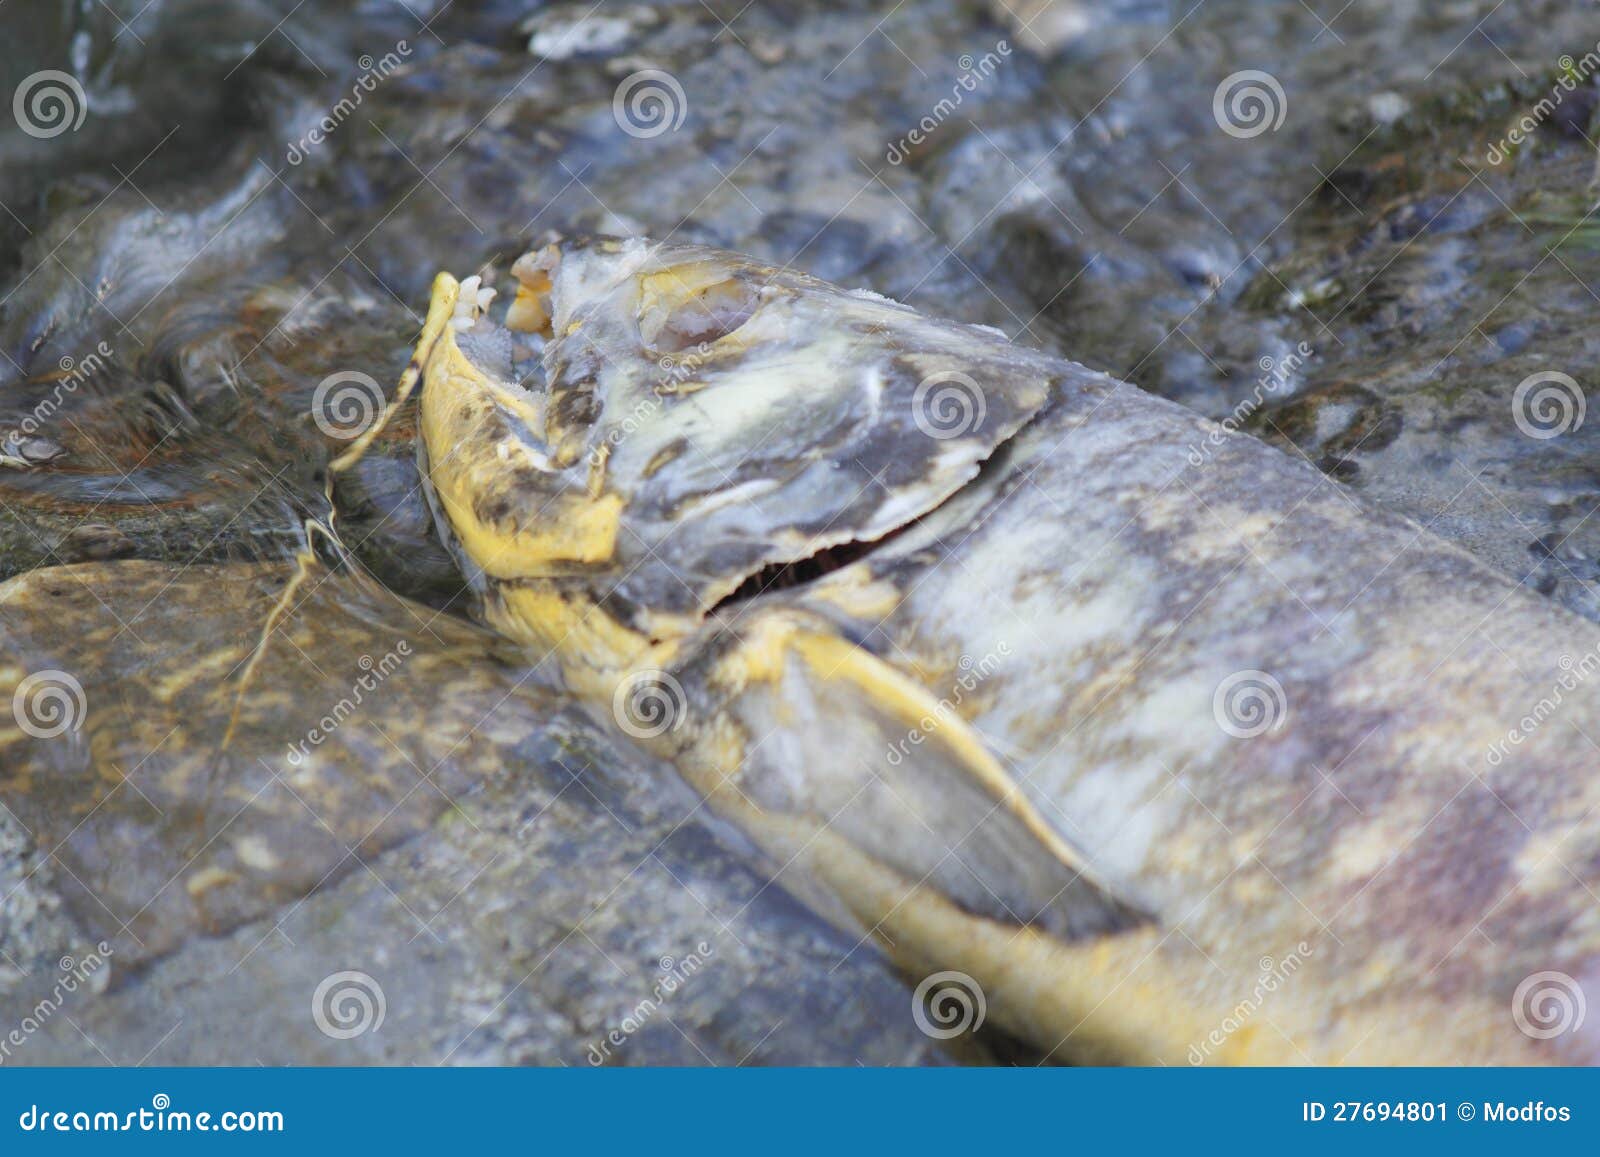 Dead Salmon stock image. Image of year, chum, body, salt - 27694801